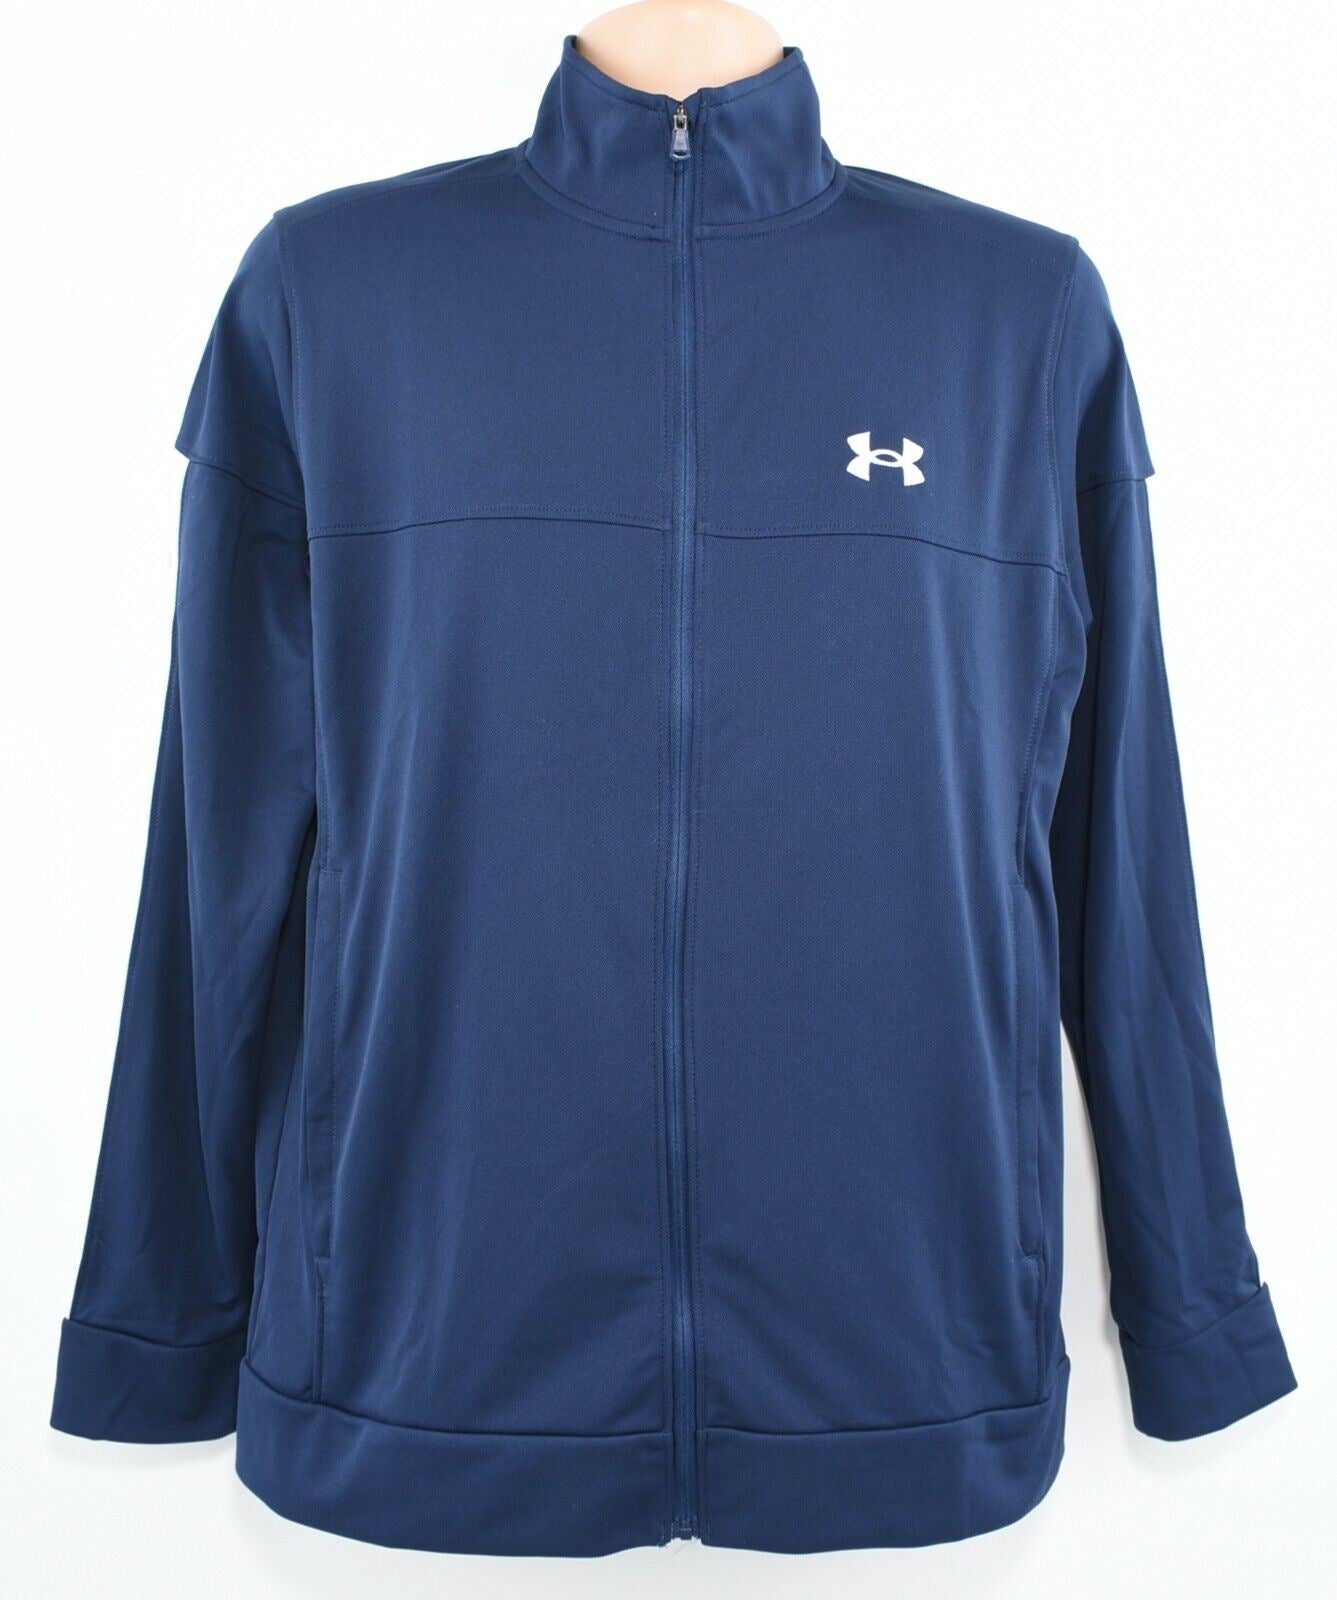 UNDER ARMOUR Men's Sportstyle Zip Tracktop /Jacket, Navy Blue, size M